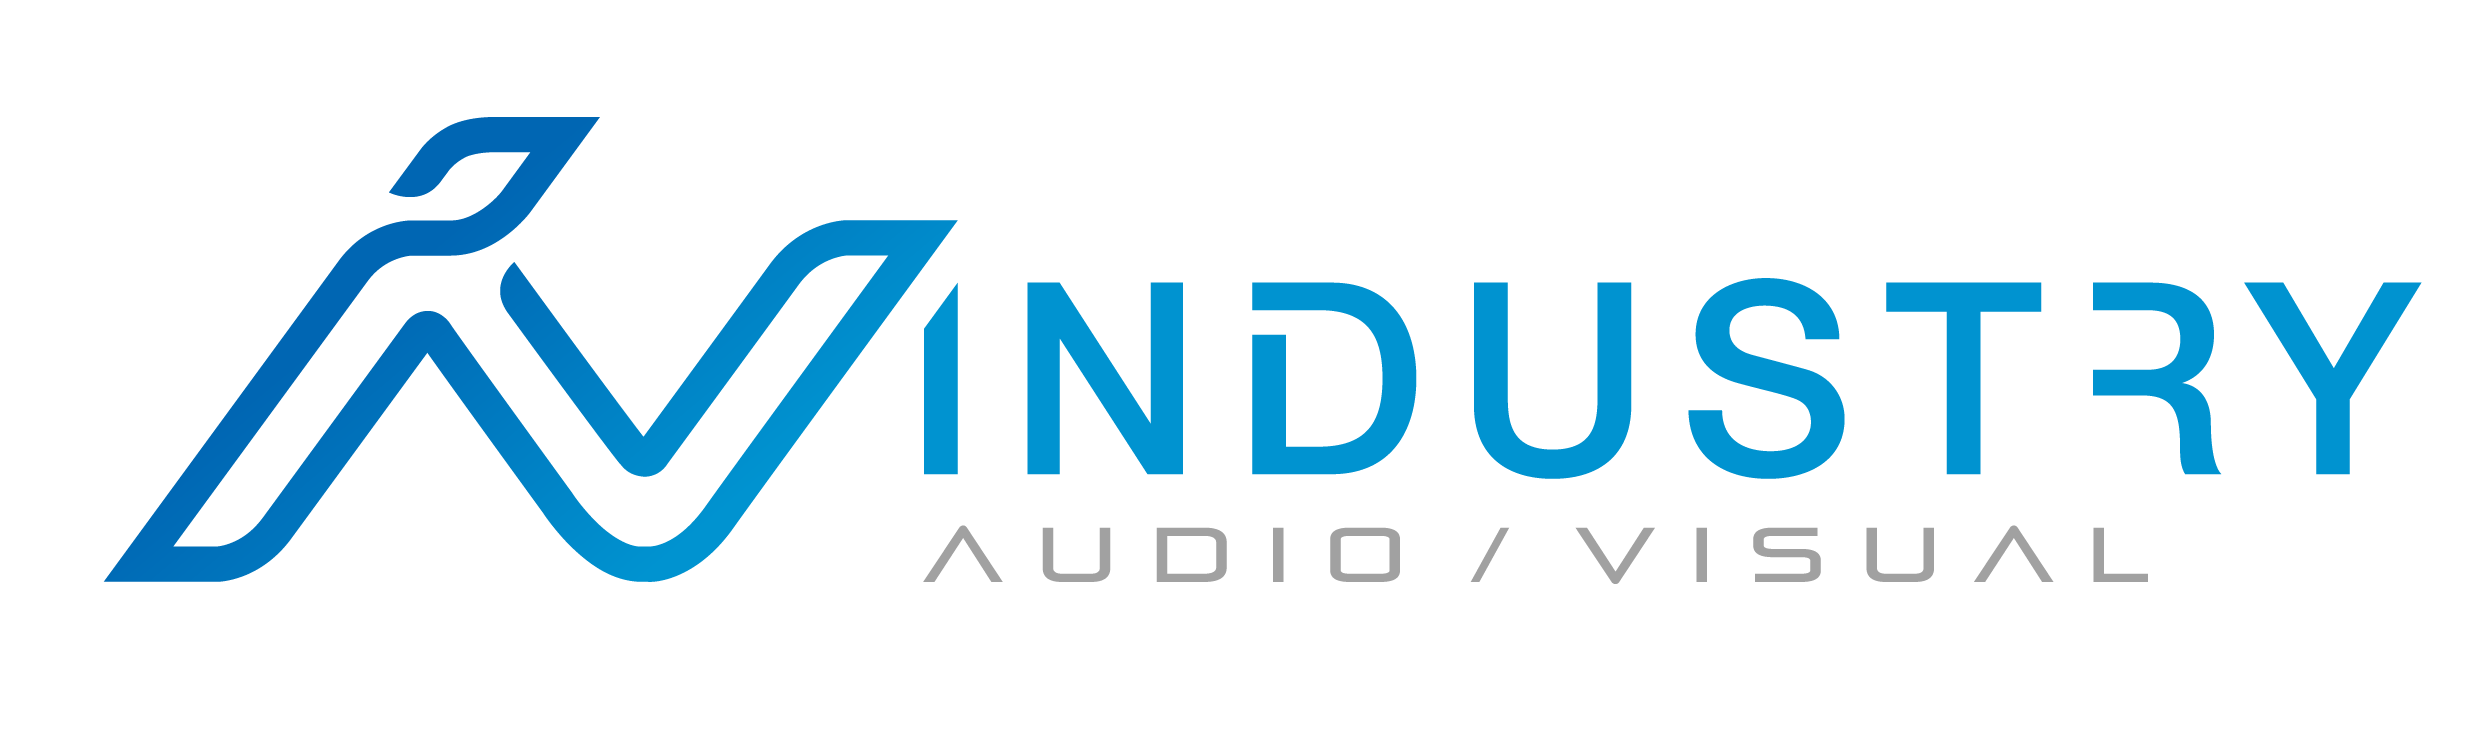 Industry Audio Visual